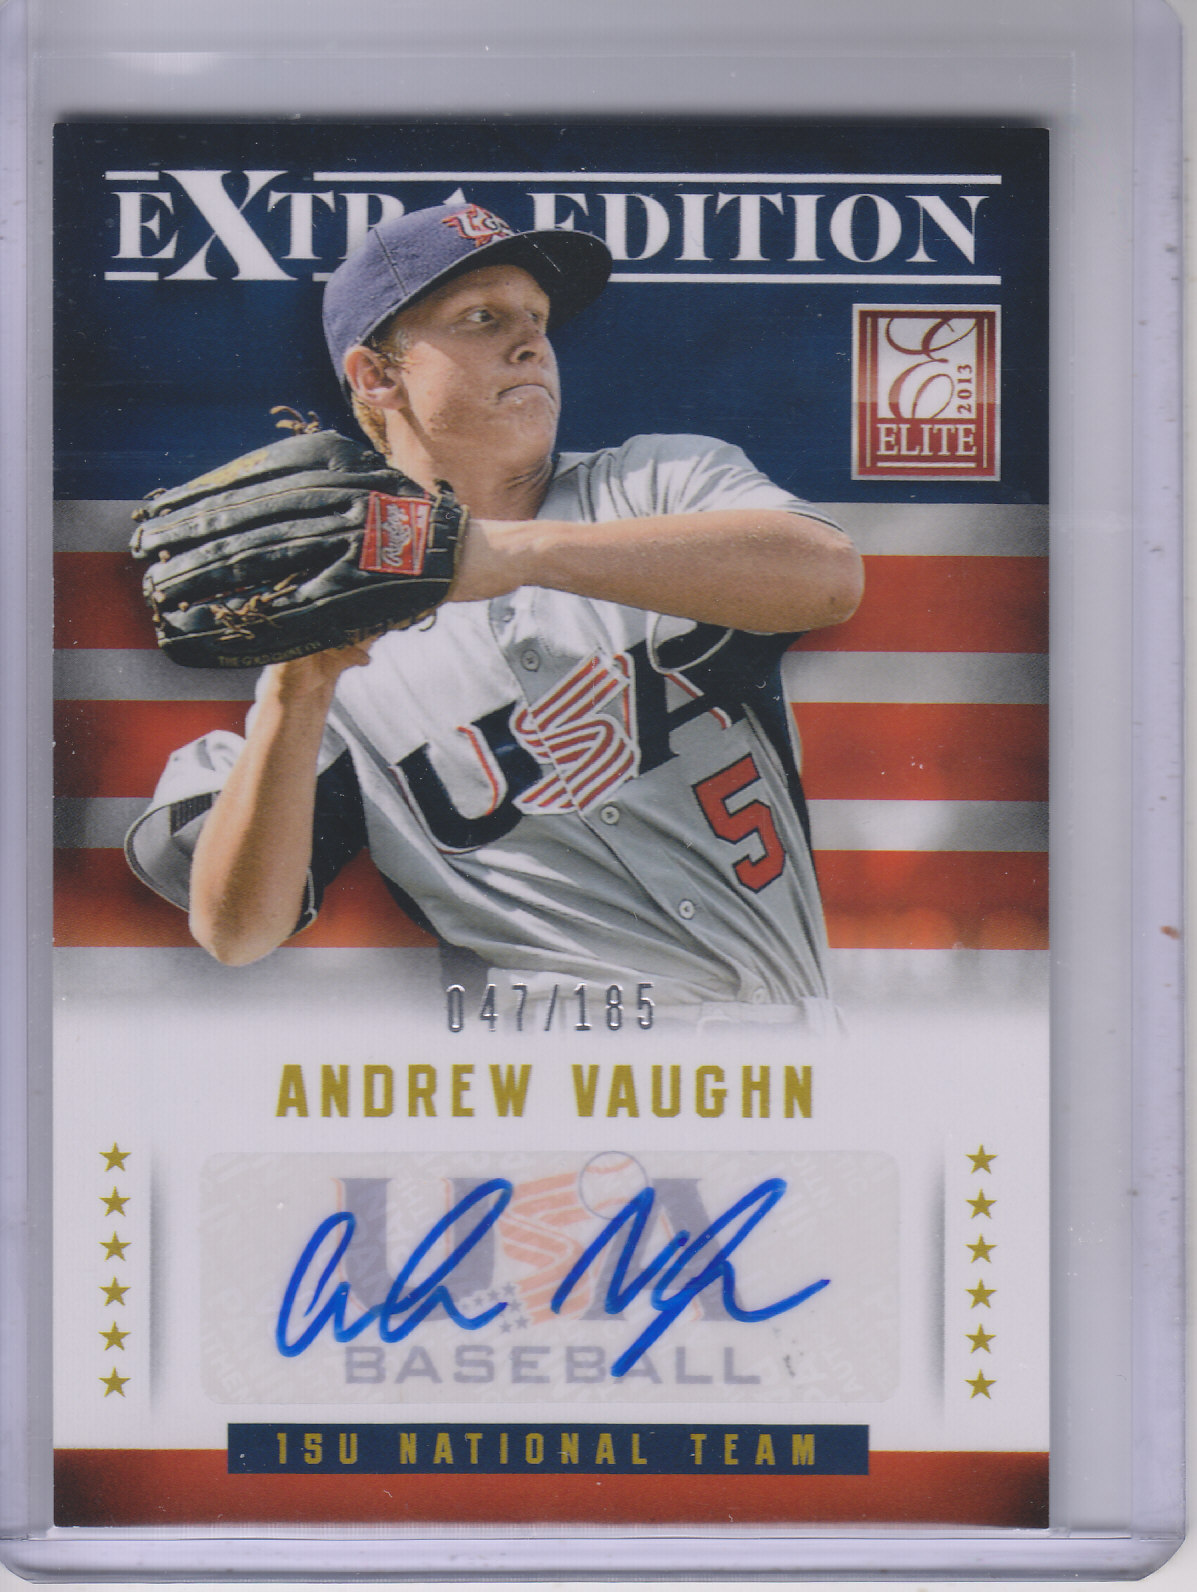 Buy Andrew Vaughn Cards Online Andrew Vaughn Baseball Price Guide